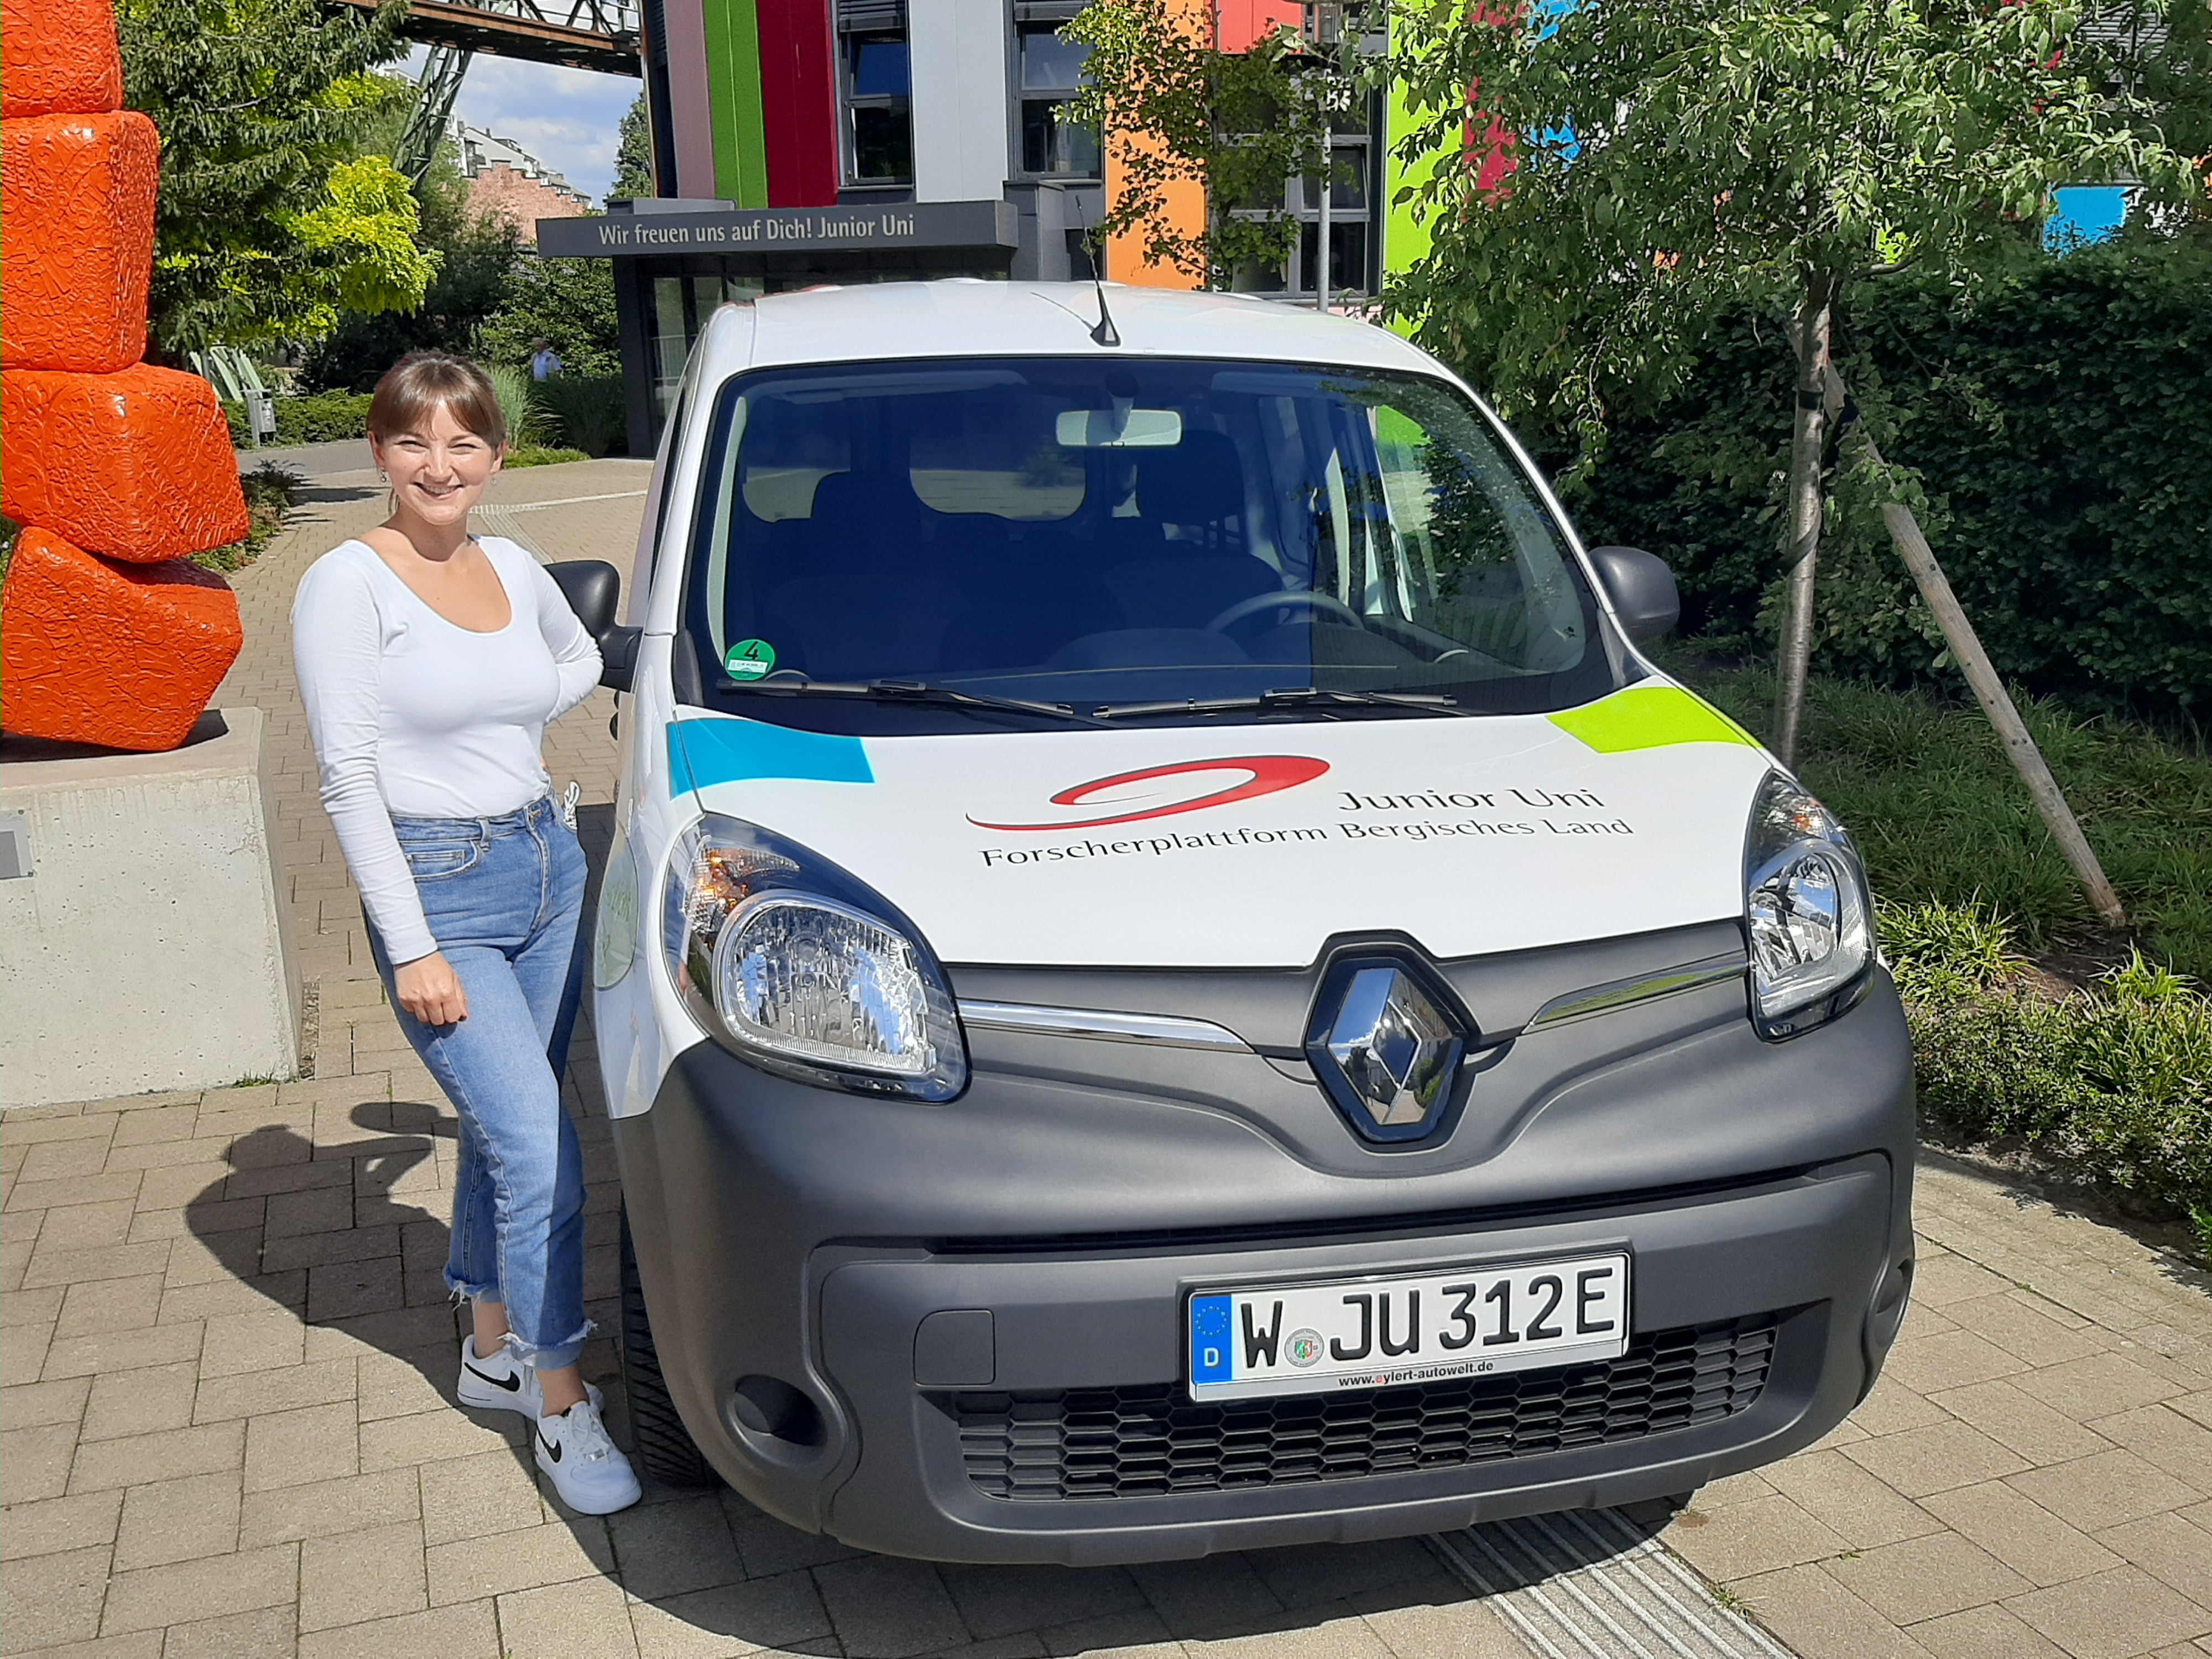 Aushilfkraft Anna Stojanow steht neben dem neuen Junior Uni-E-Auto